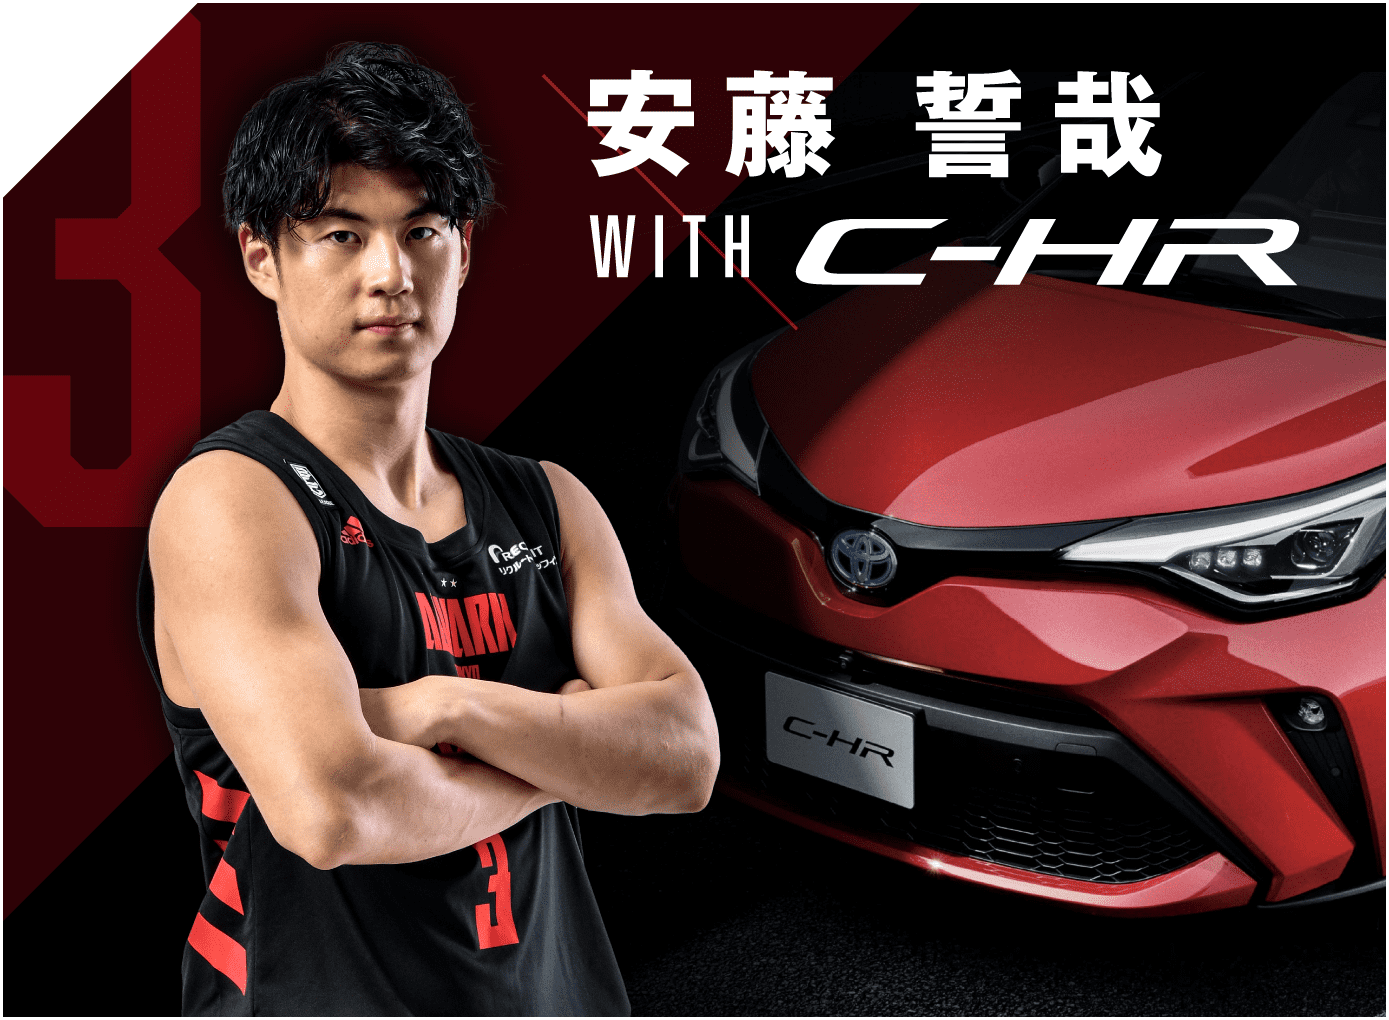 安藤誓哉 with C-HR